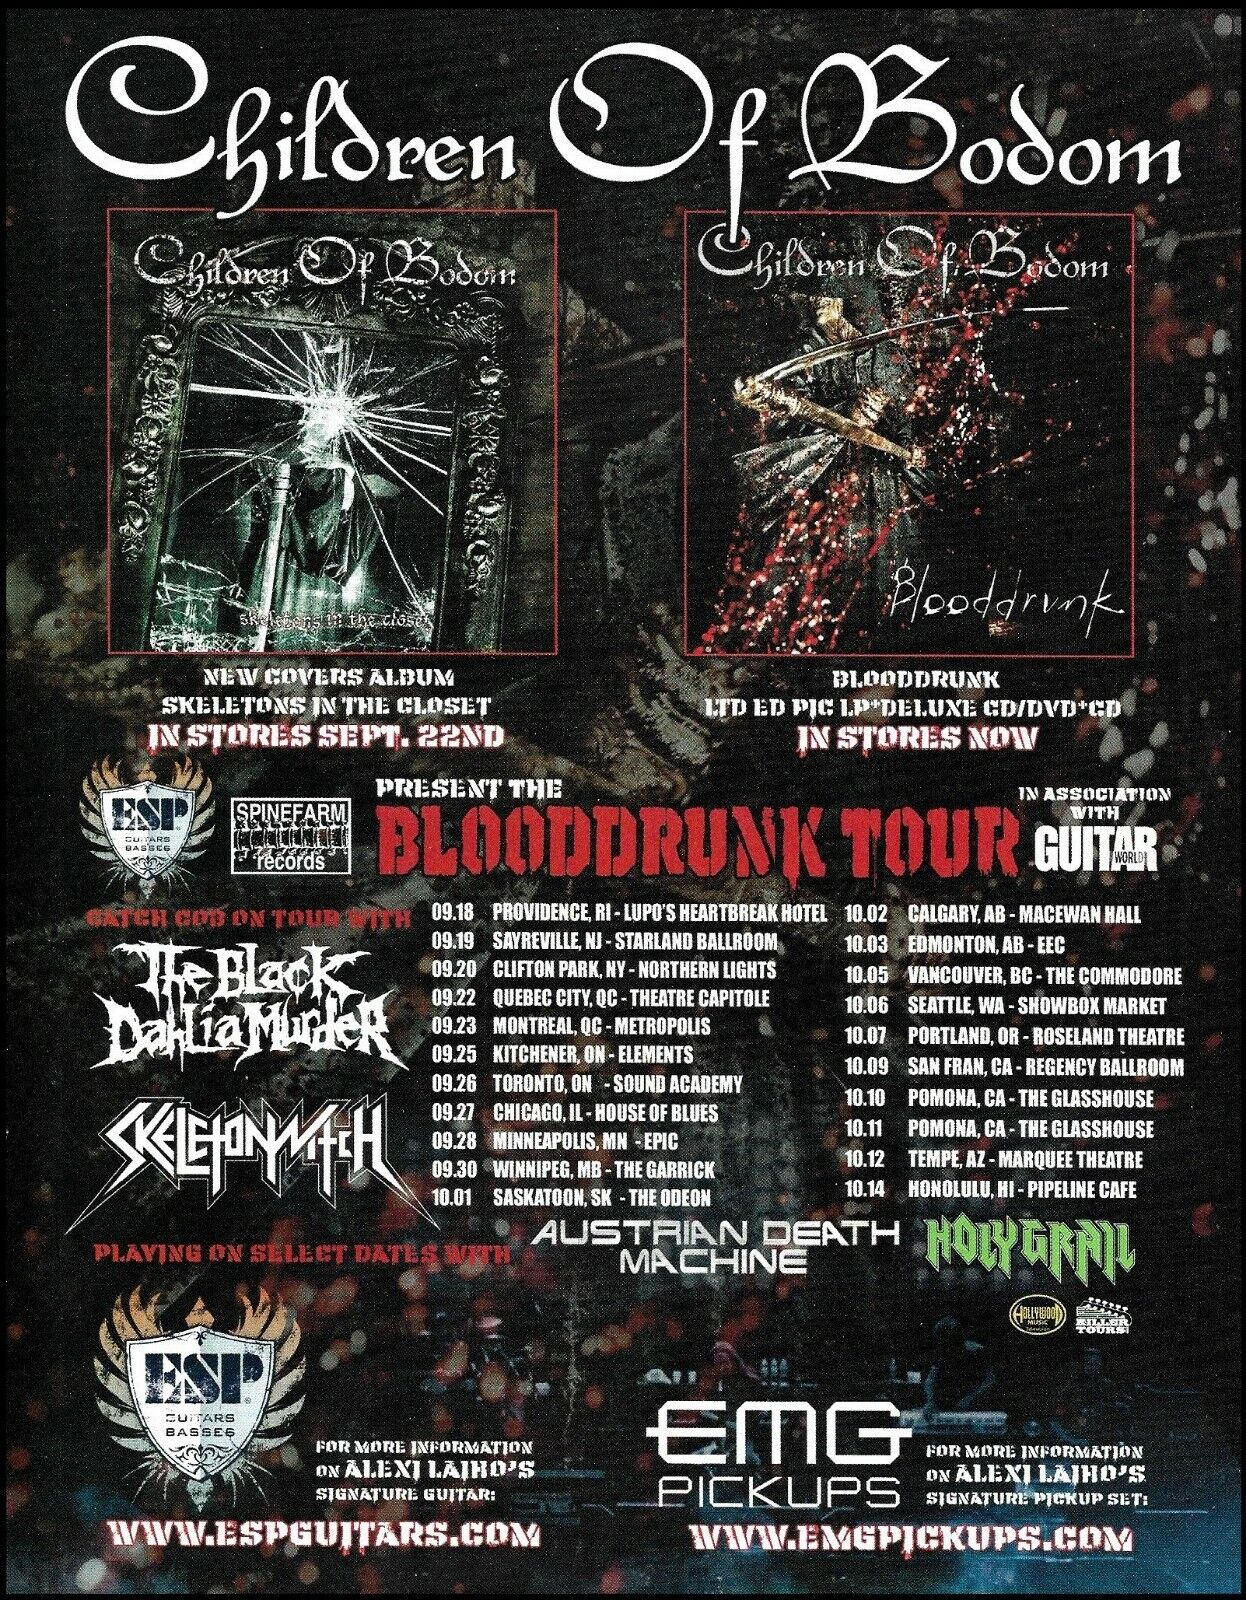 Alexi Laiho Children of Bodom 2009 Blooddruck Tour Dates ad 8 x 11 advertisement